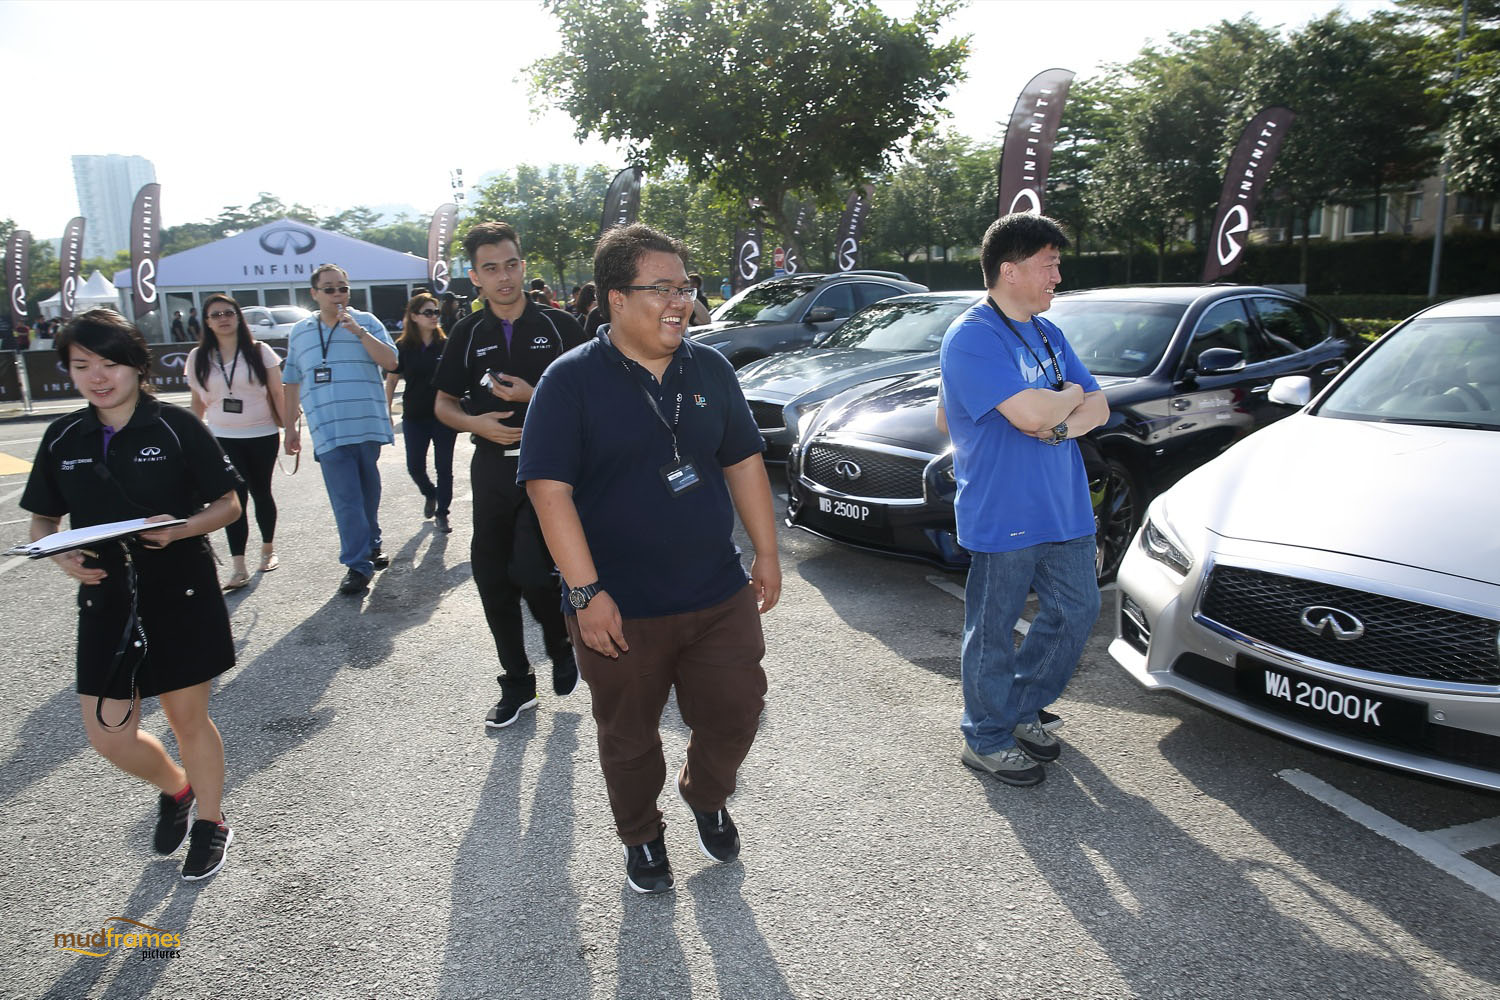 Infiniti Drive Malaysia in Desa Parkcity 2015